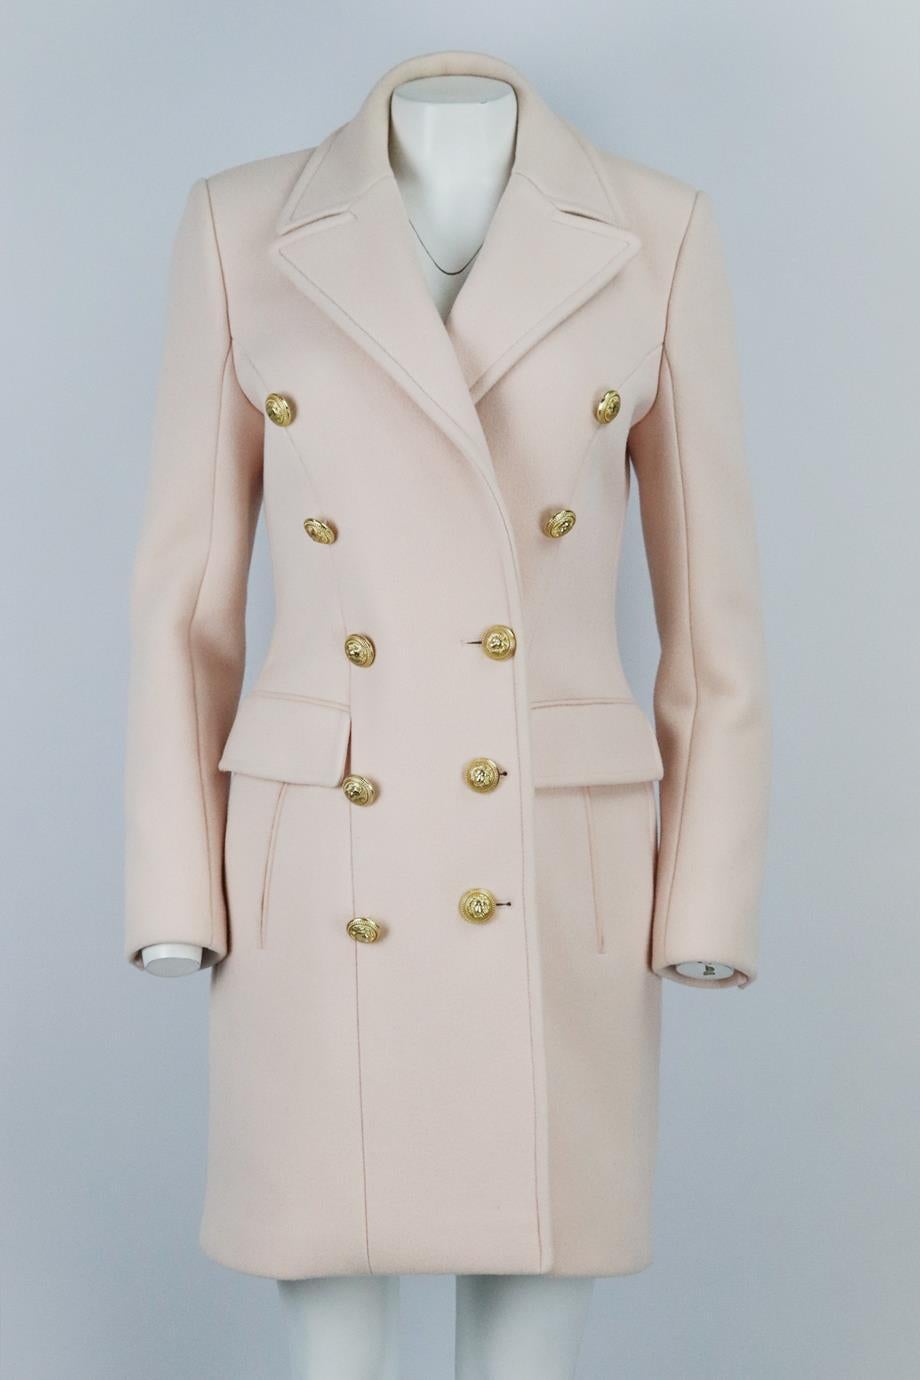 Balmain button embellished wool and cashmere blend coat. Pink. Long sleeve, v-neck. Button fastening at front. 90% Virgin wool, 10% cashmere; lining: 52% viscose, 48% cotton. Size: FR 42 (UK 14, US 10, IT 46). Shoulder to shoulder: 15.5 in. Bust: